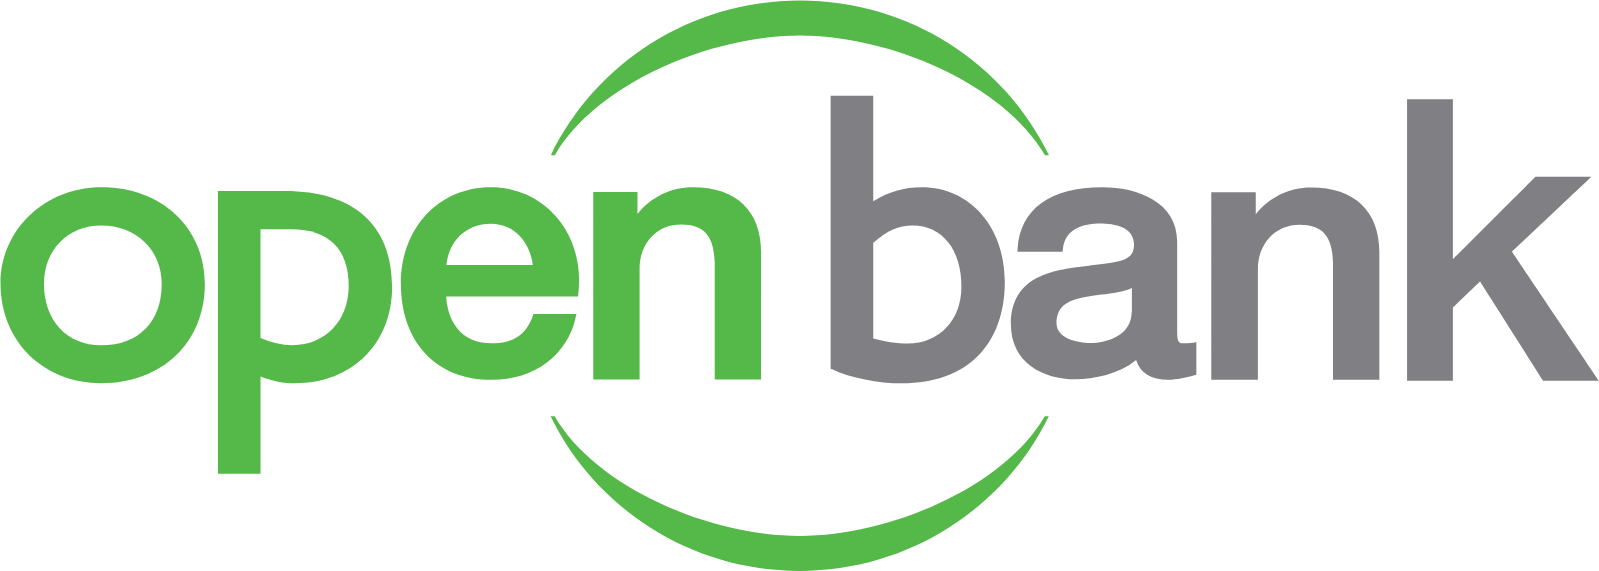 OP Bancorp (Open Bank) logo (transparent PNG)